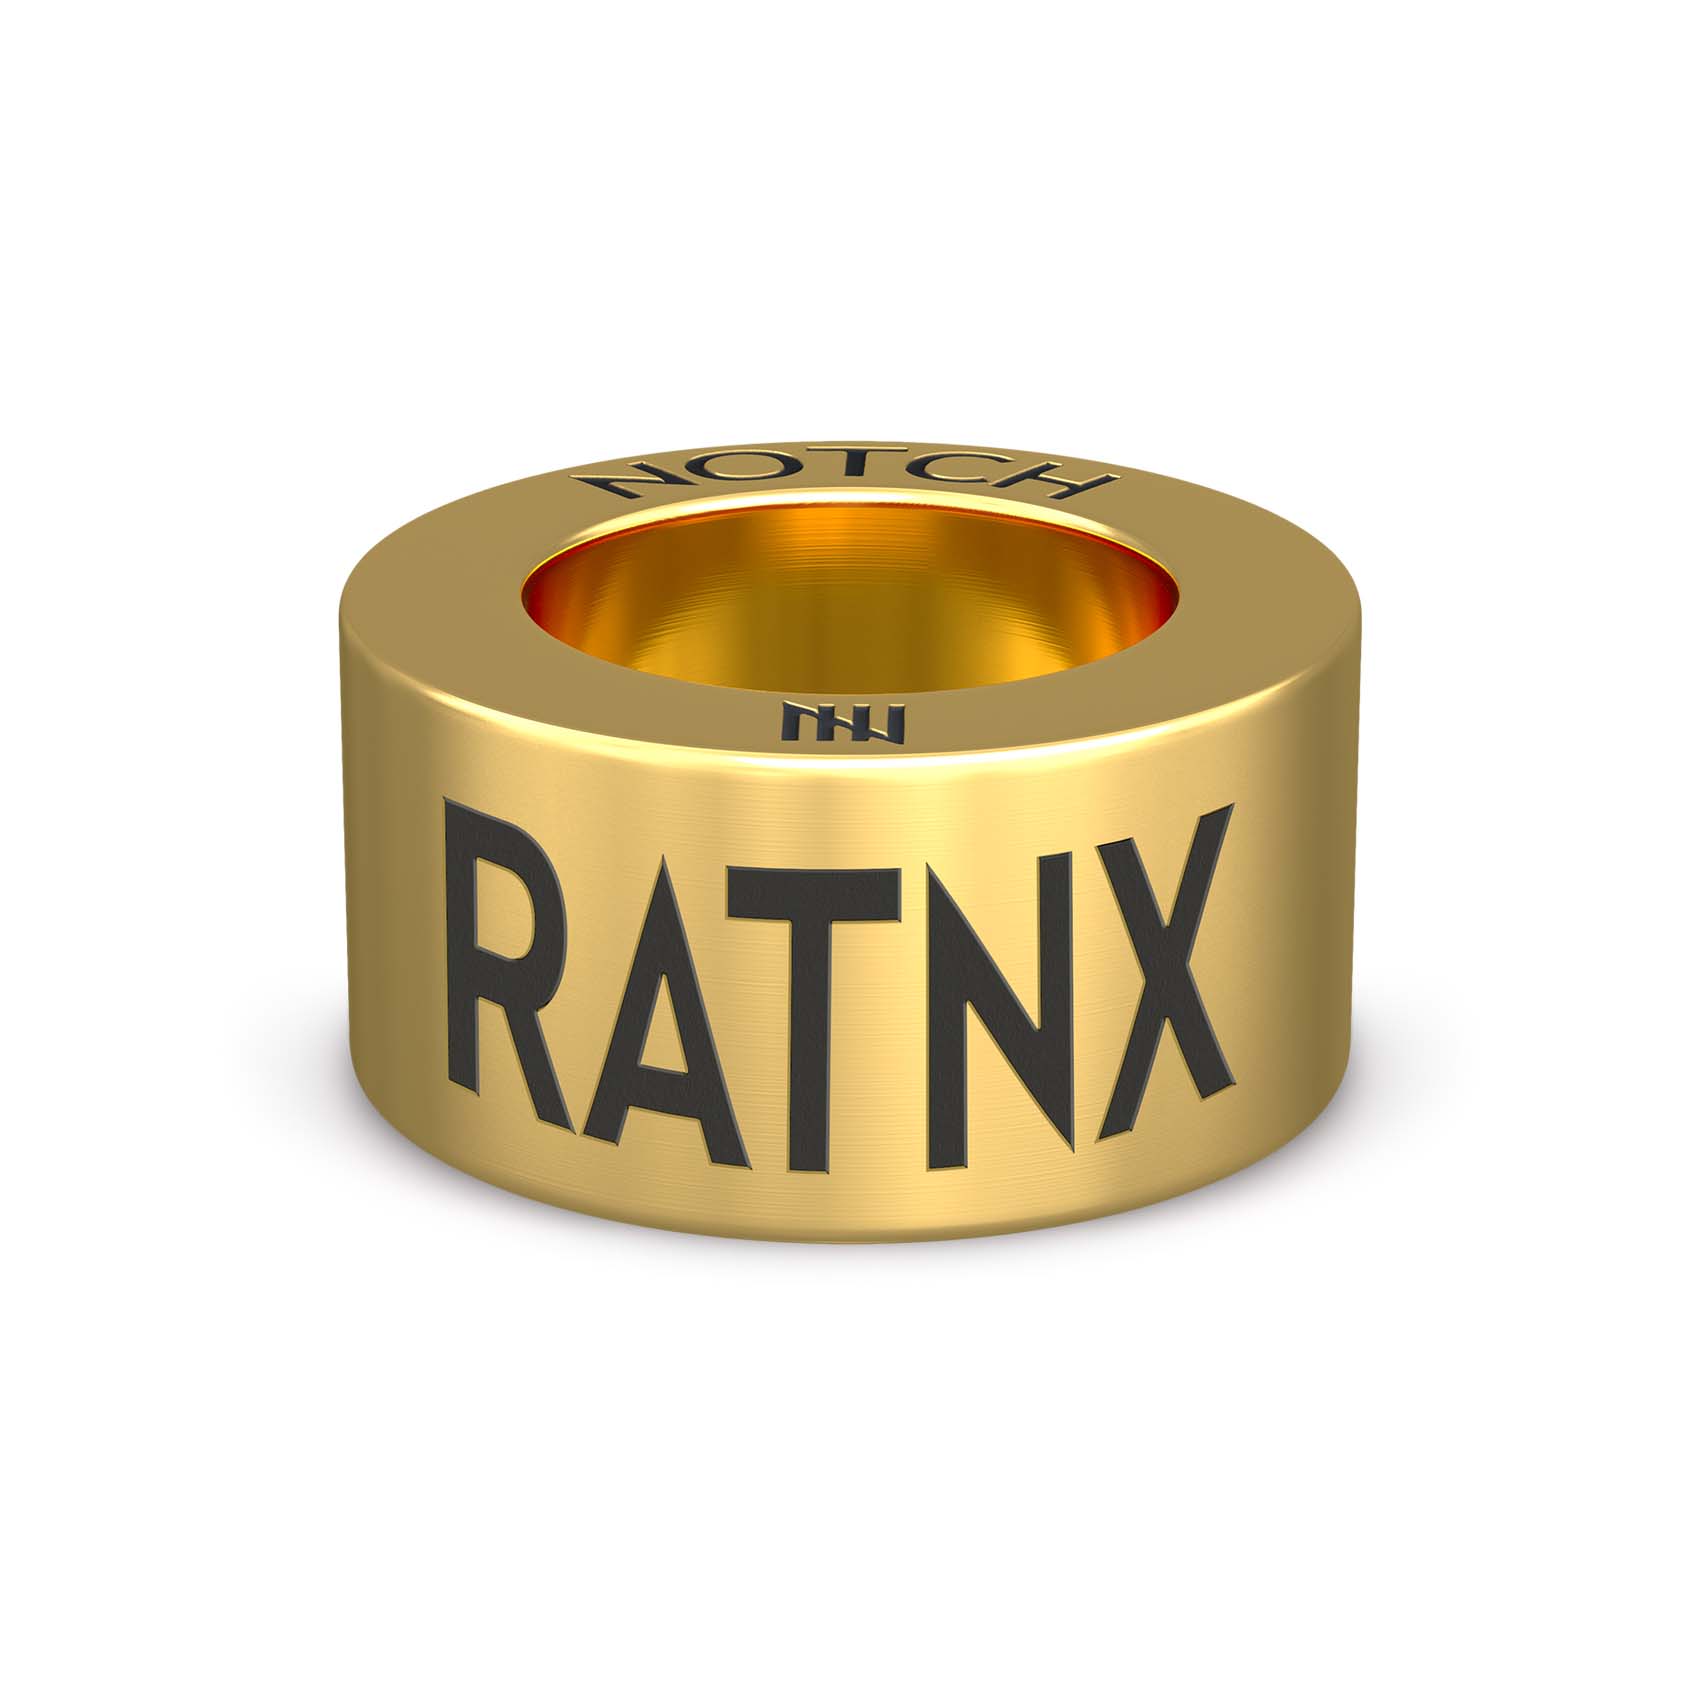 RATNX NOTCH Charm